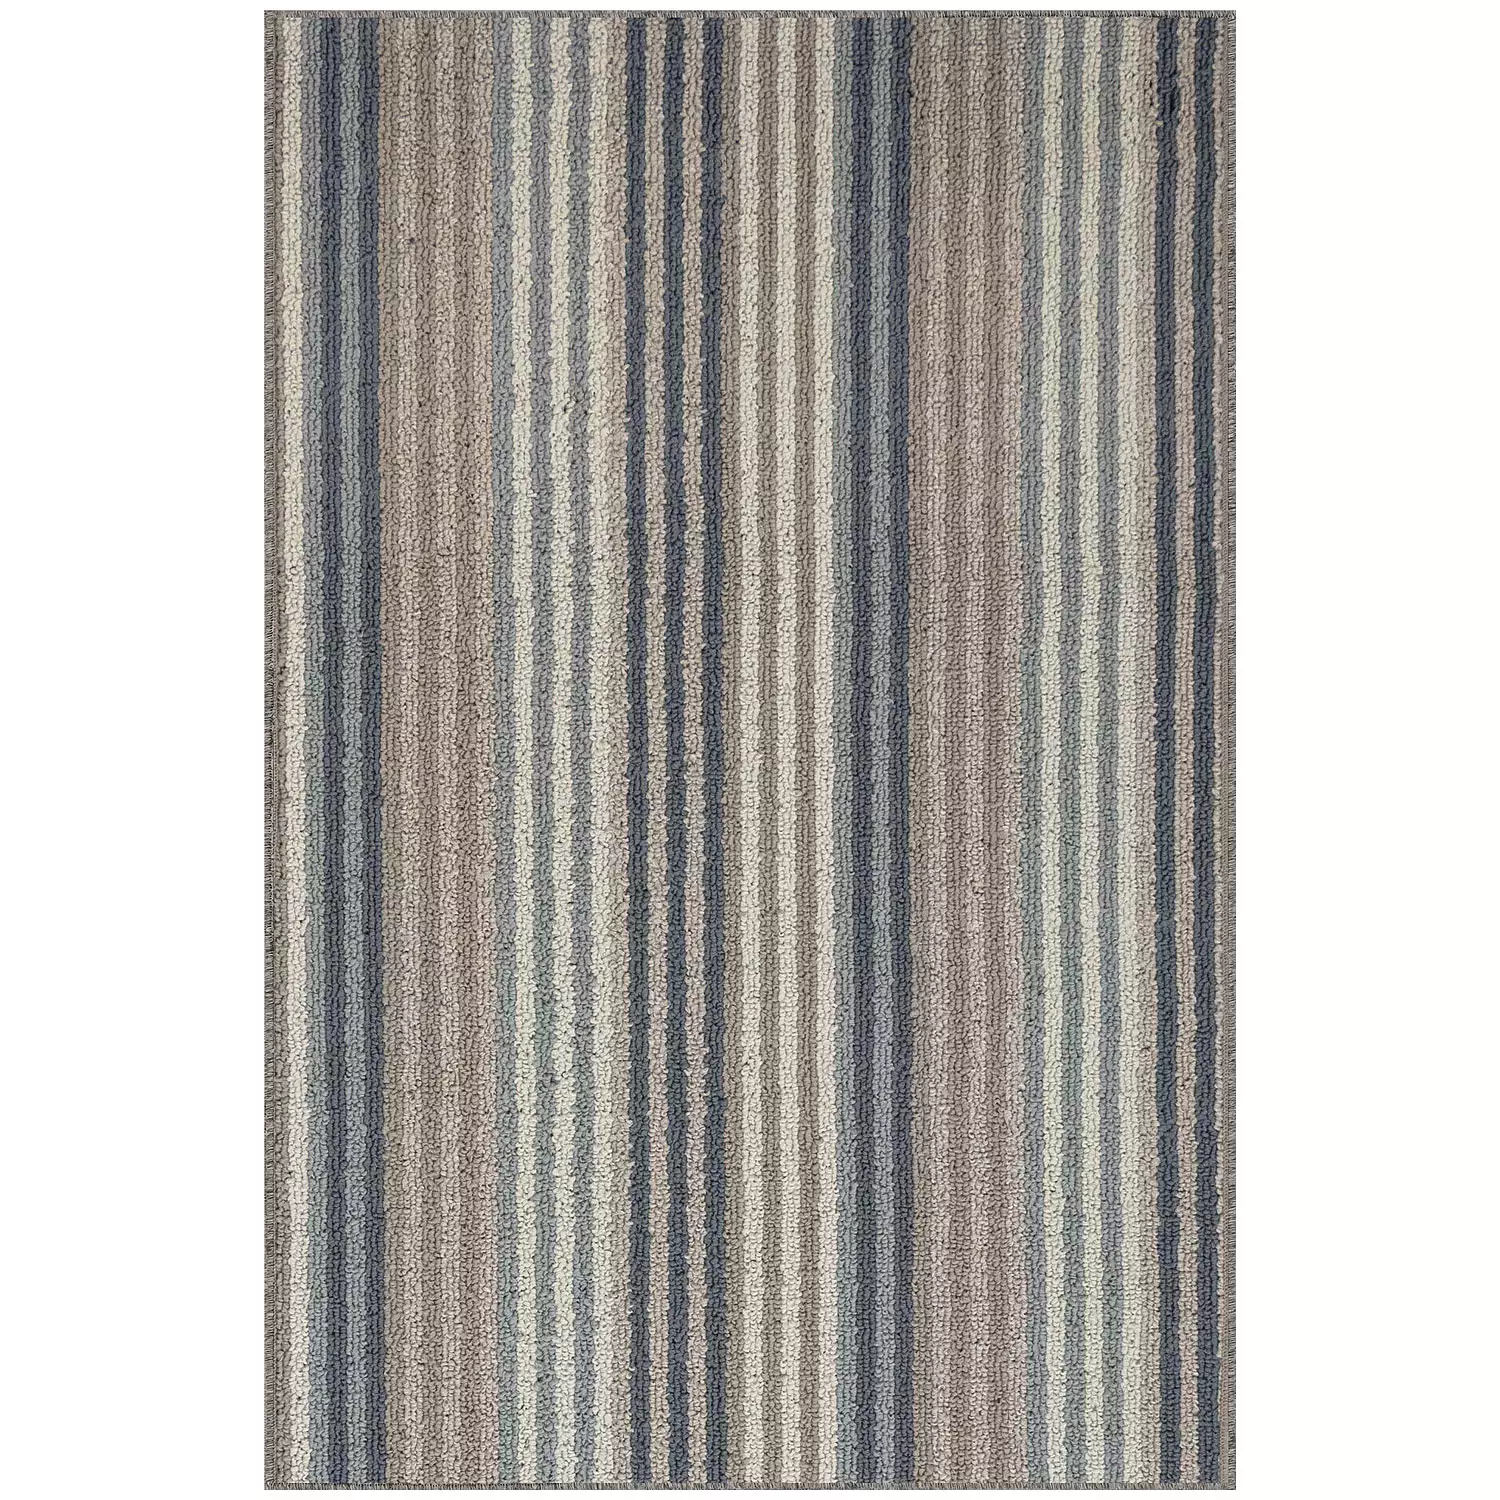 NEWPORT Collection - Loon rug, 2'x3'